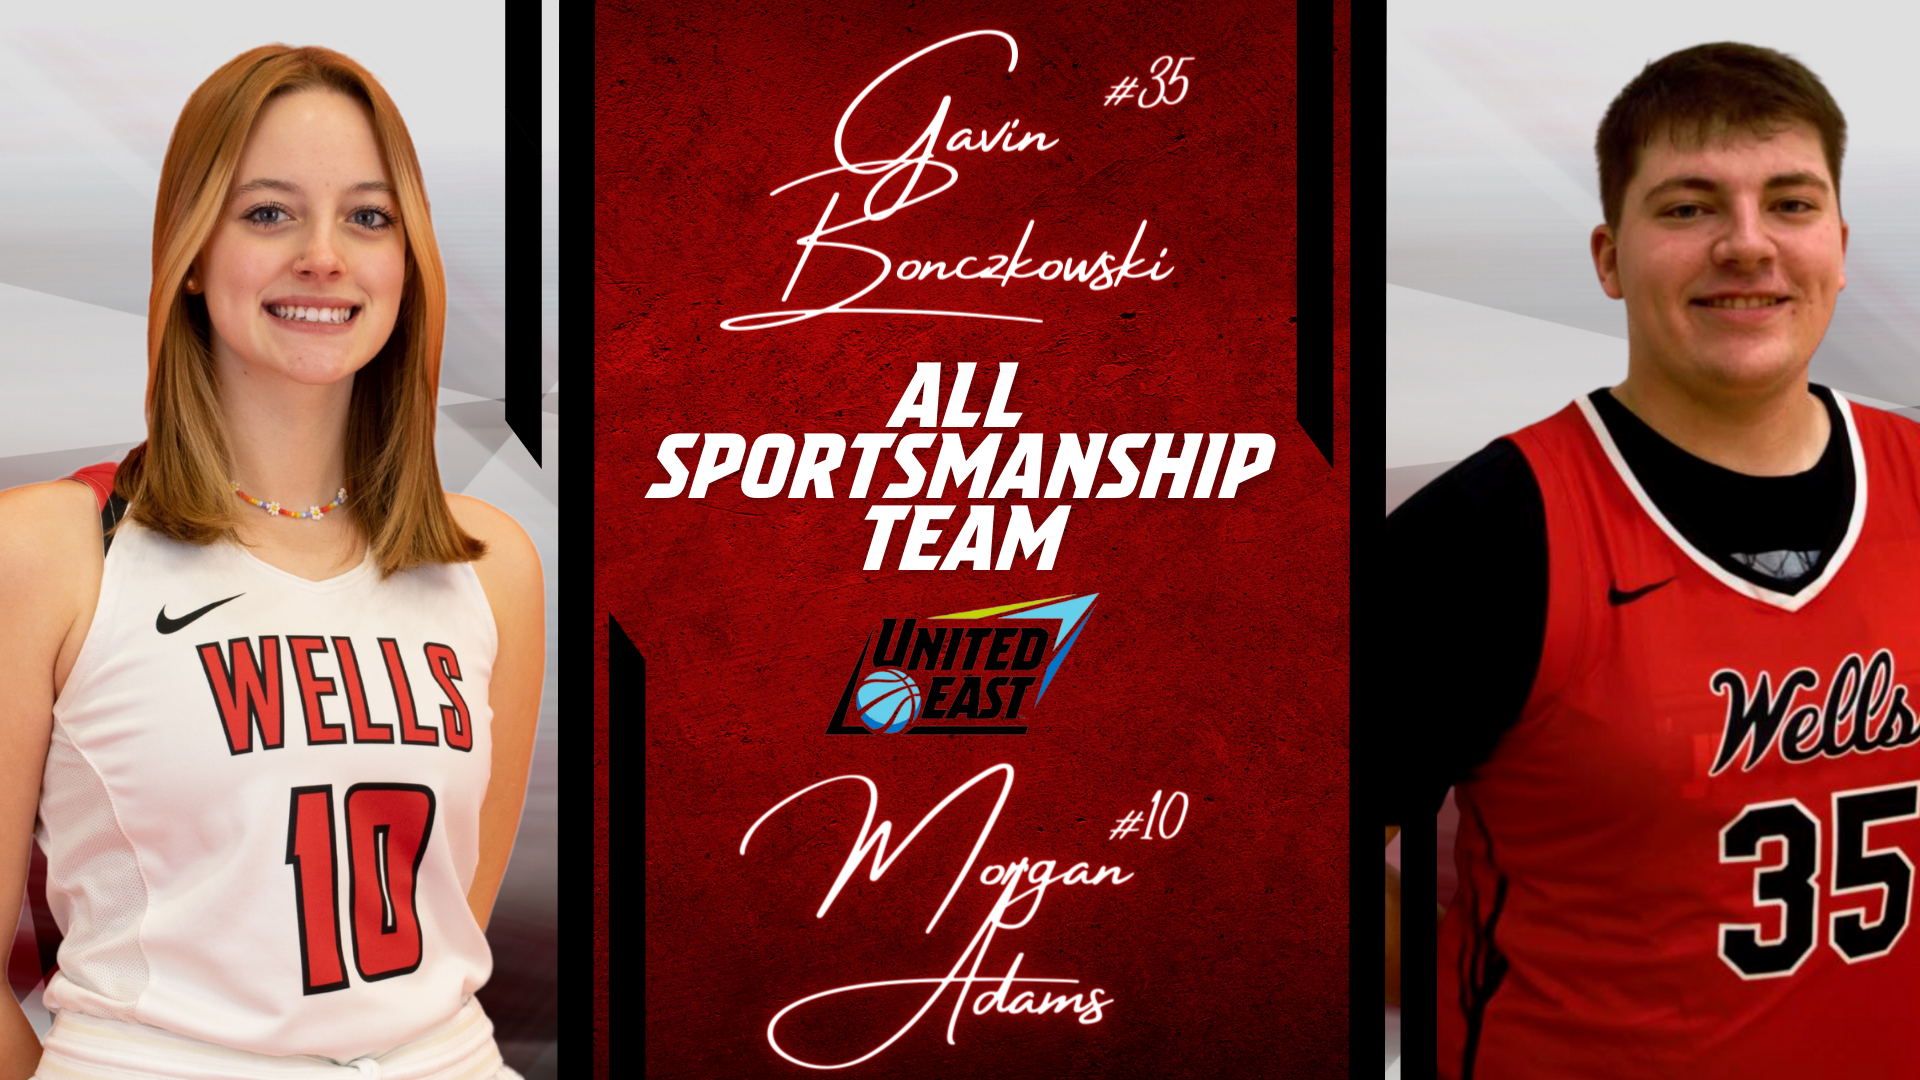 Morgan Adams and Gavin Bonczkowski are all sportsmanship teams.